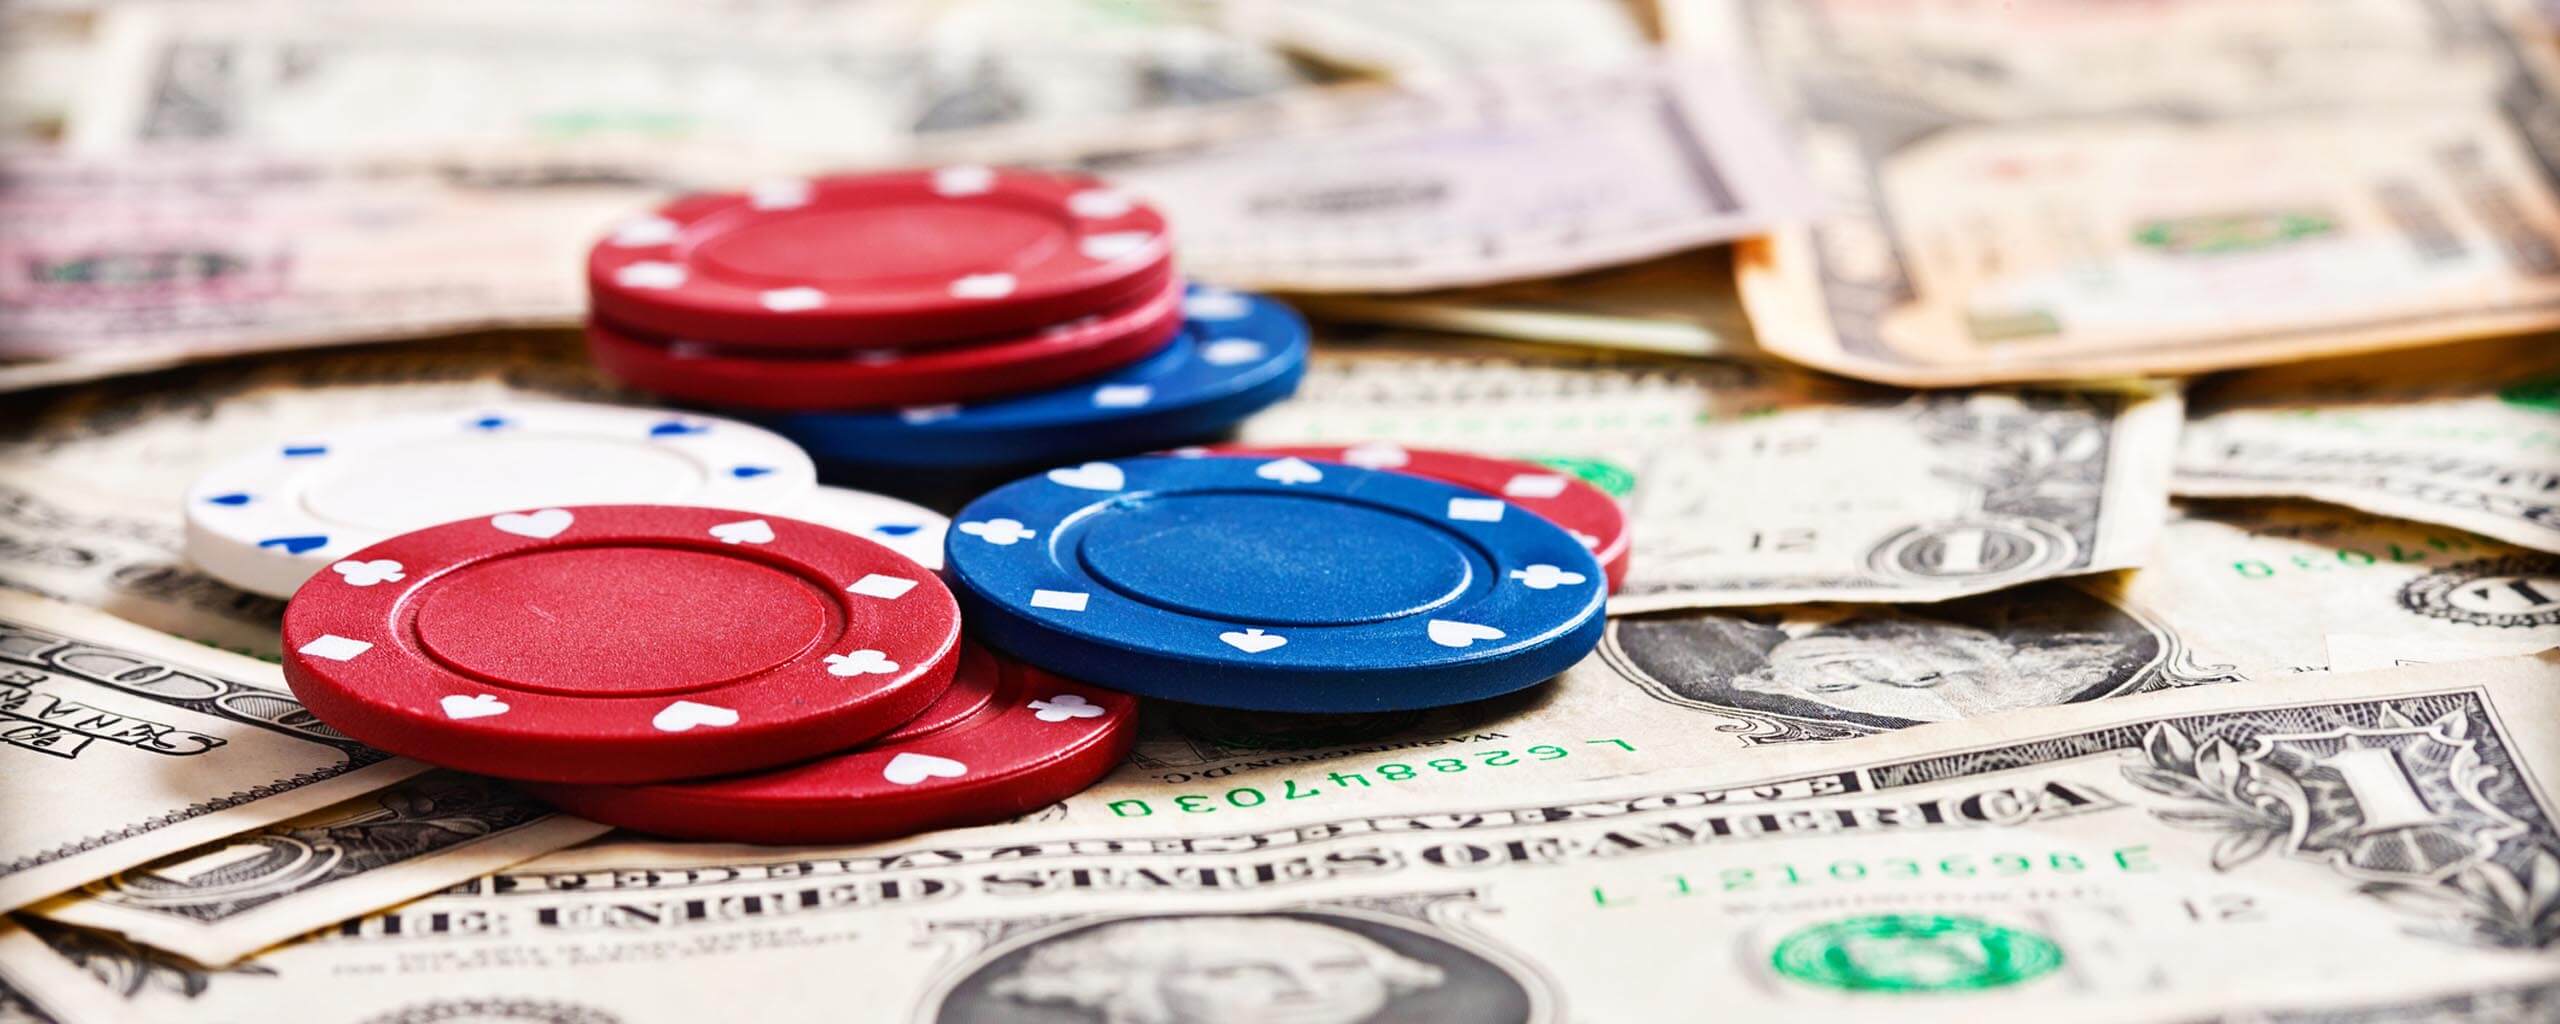 Gambling chips on dollar banknotes